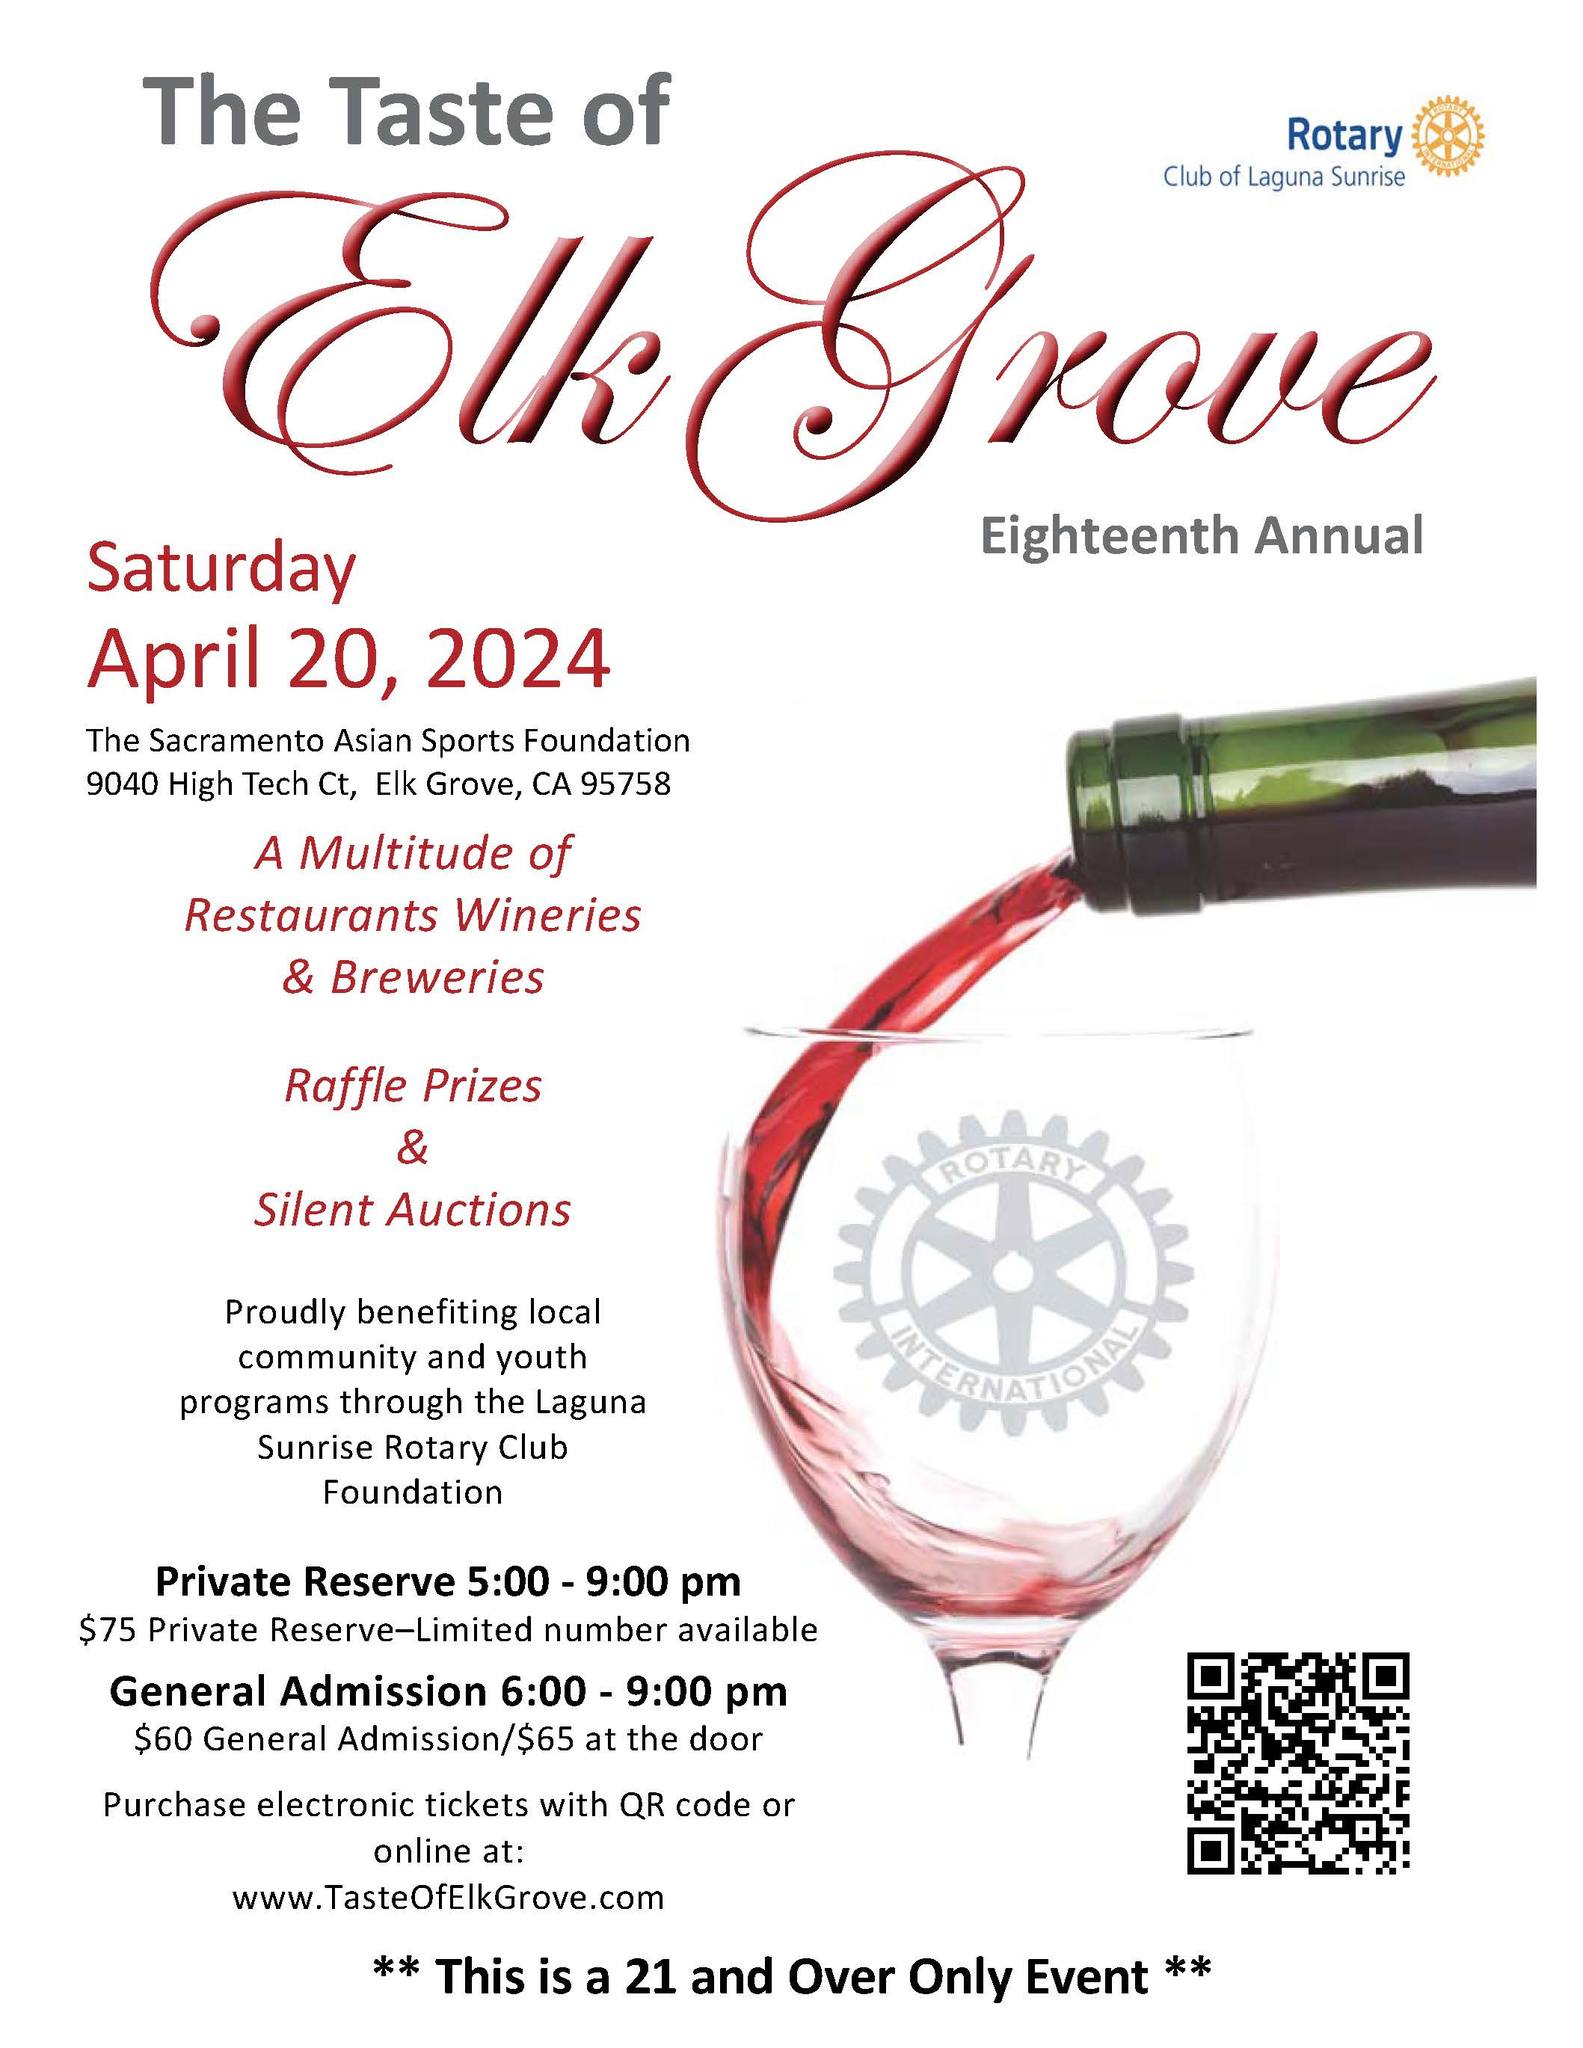 The Taste of Elk Grove hosted by the Rotary Club of Laguna Sunrise